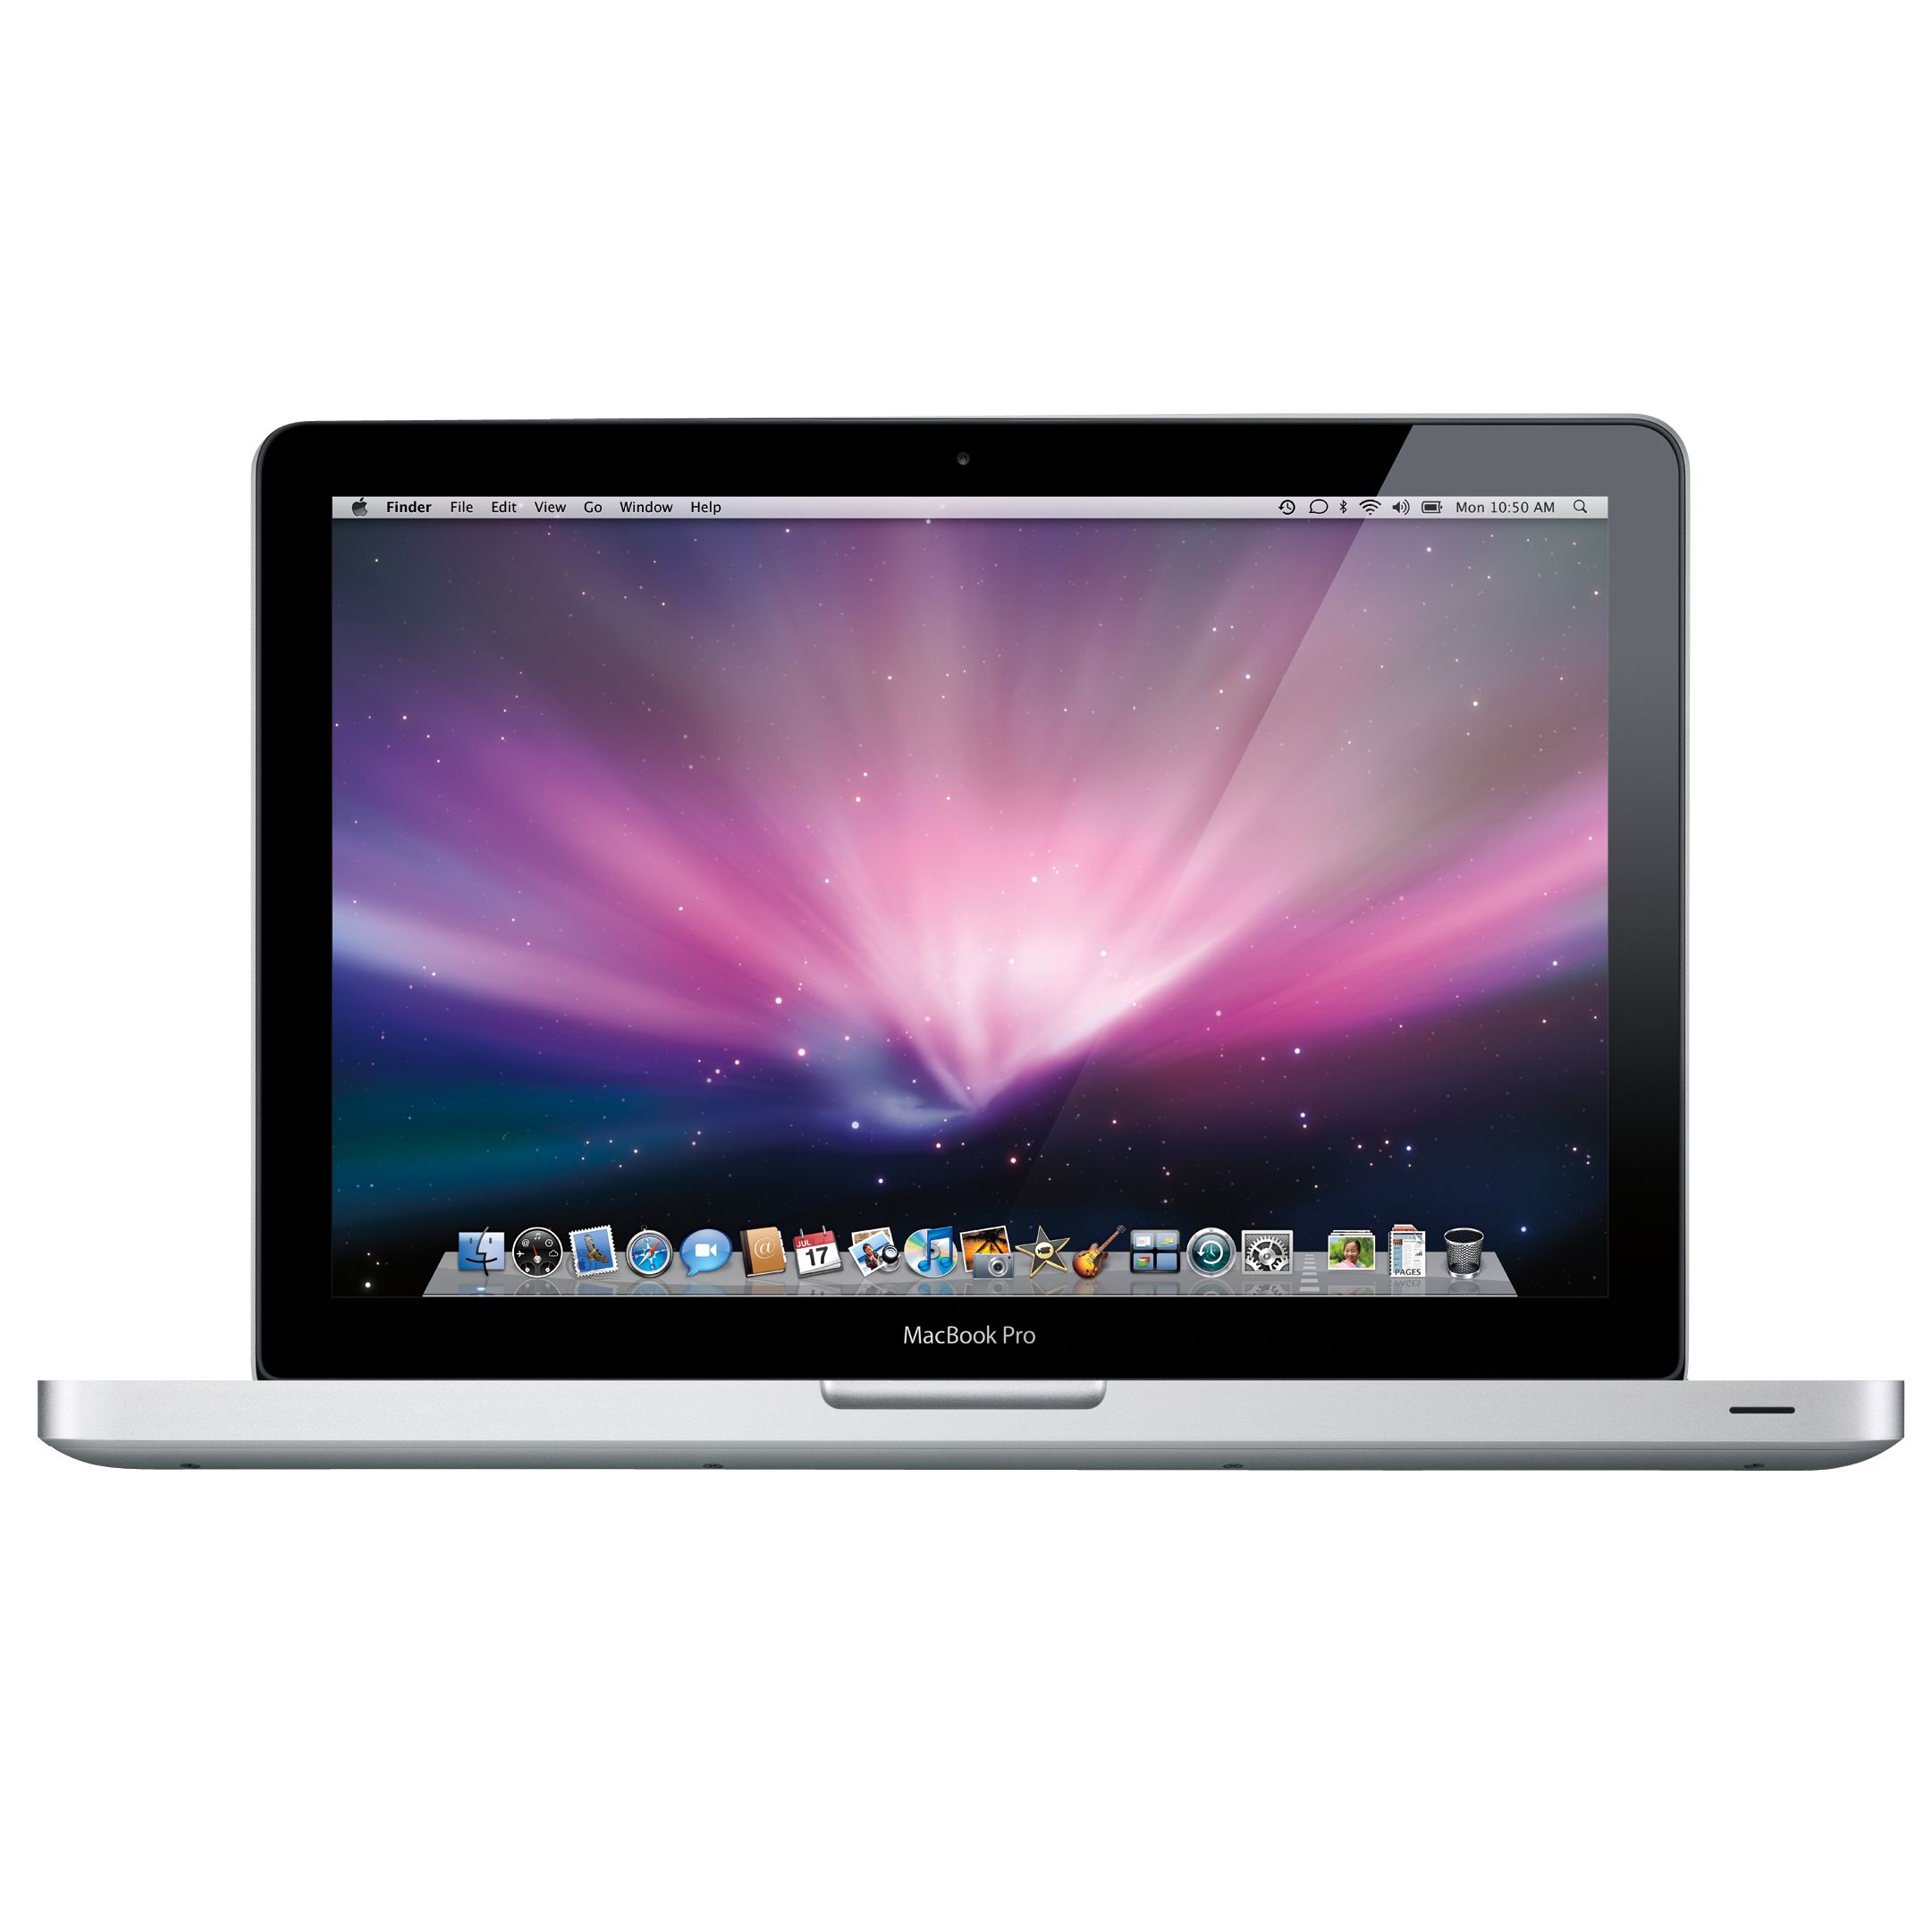 Apple MacBook Pro MC375B/A, Intel Core 2 Duo, 320GB, 2.66GHz, 4GB RAM with 13.3 Inch Display at John Lewis